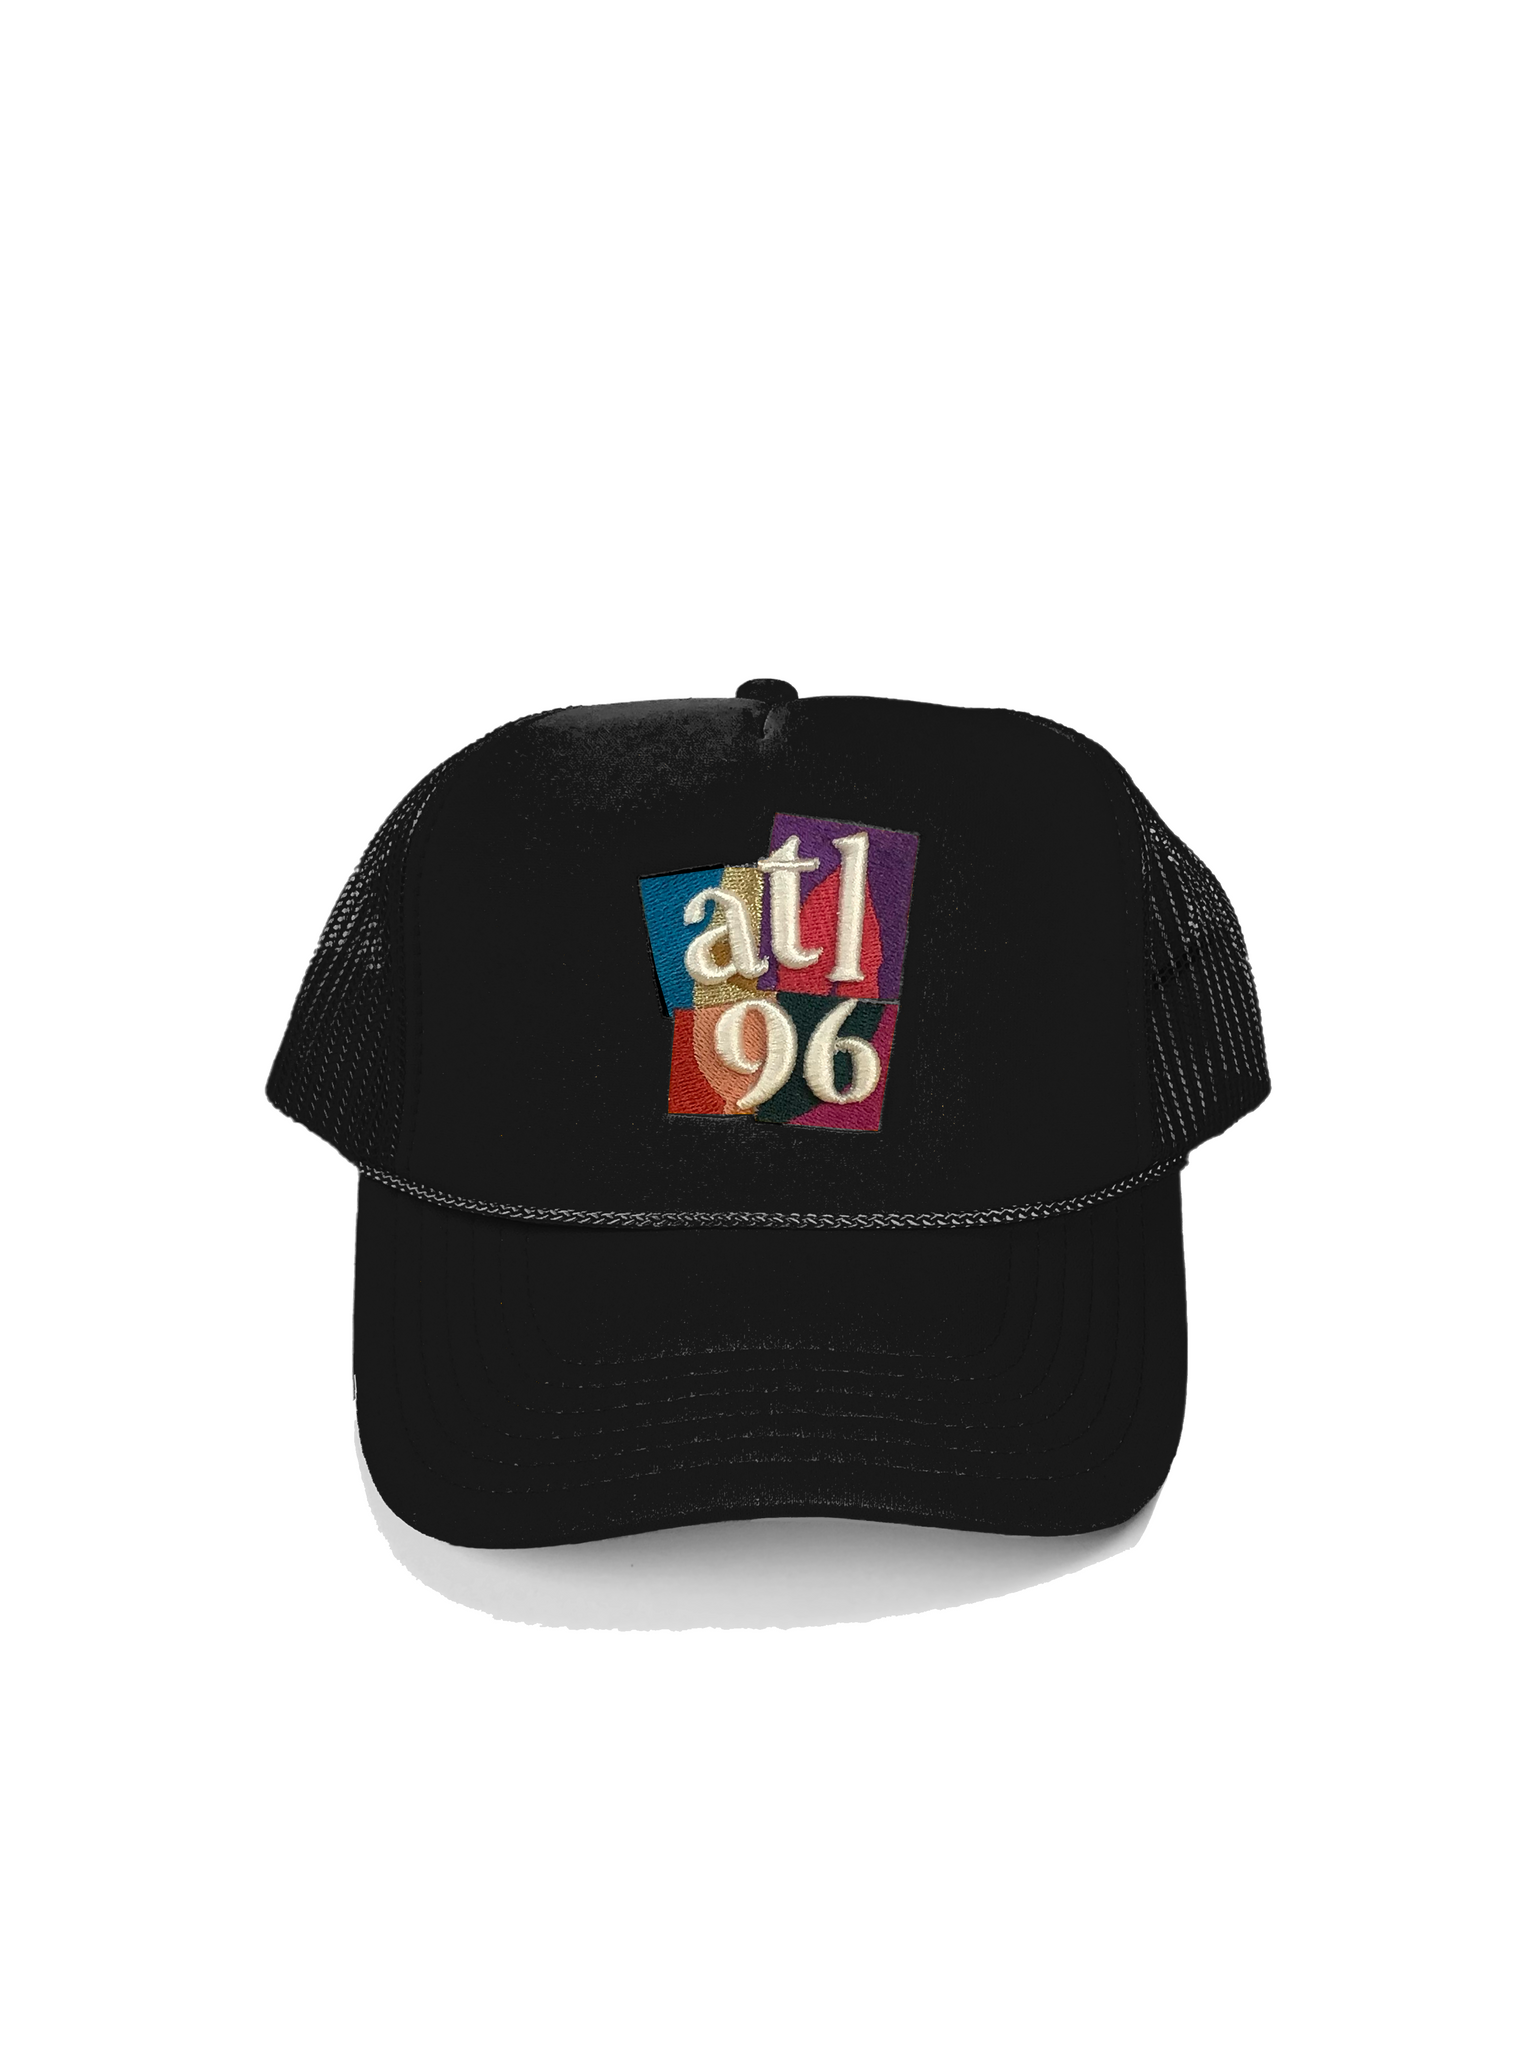 atl1996 Stacked '96 'Closing Ceremony' Trucker Hat